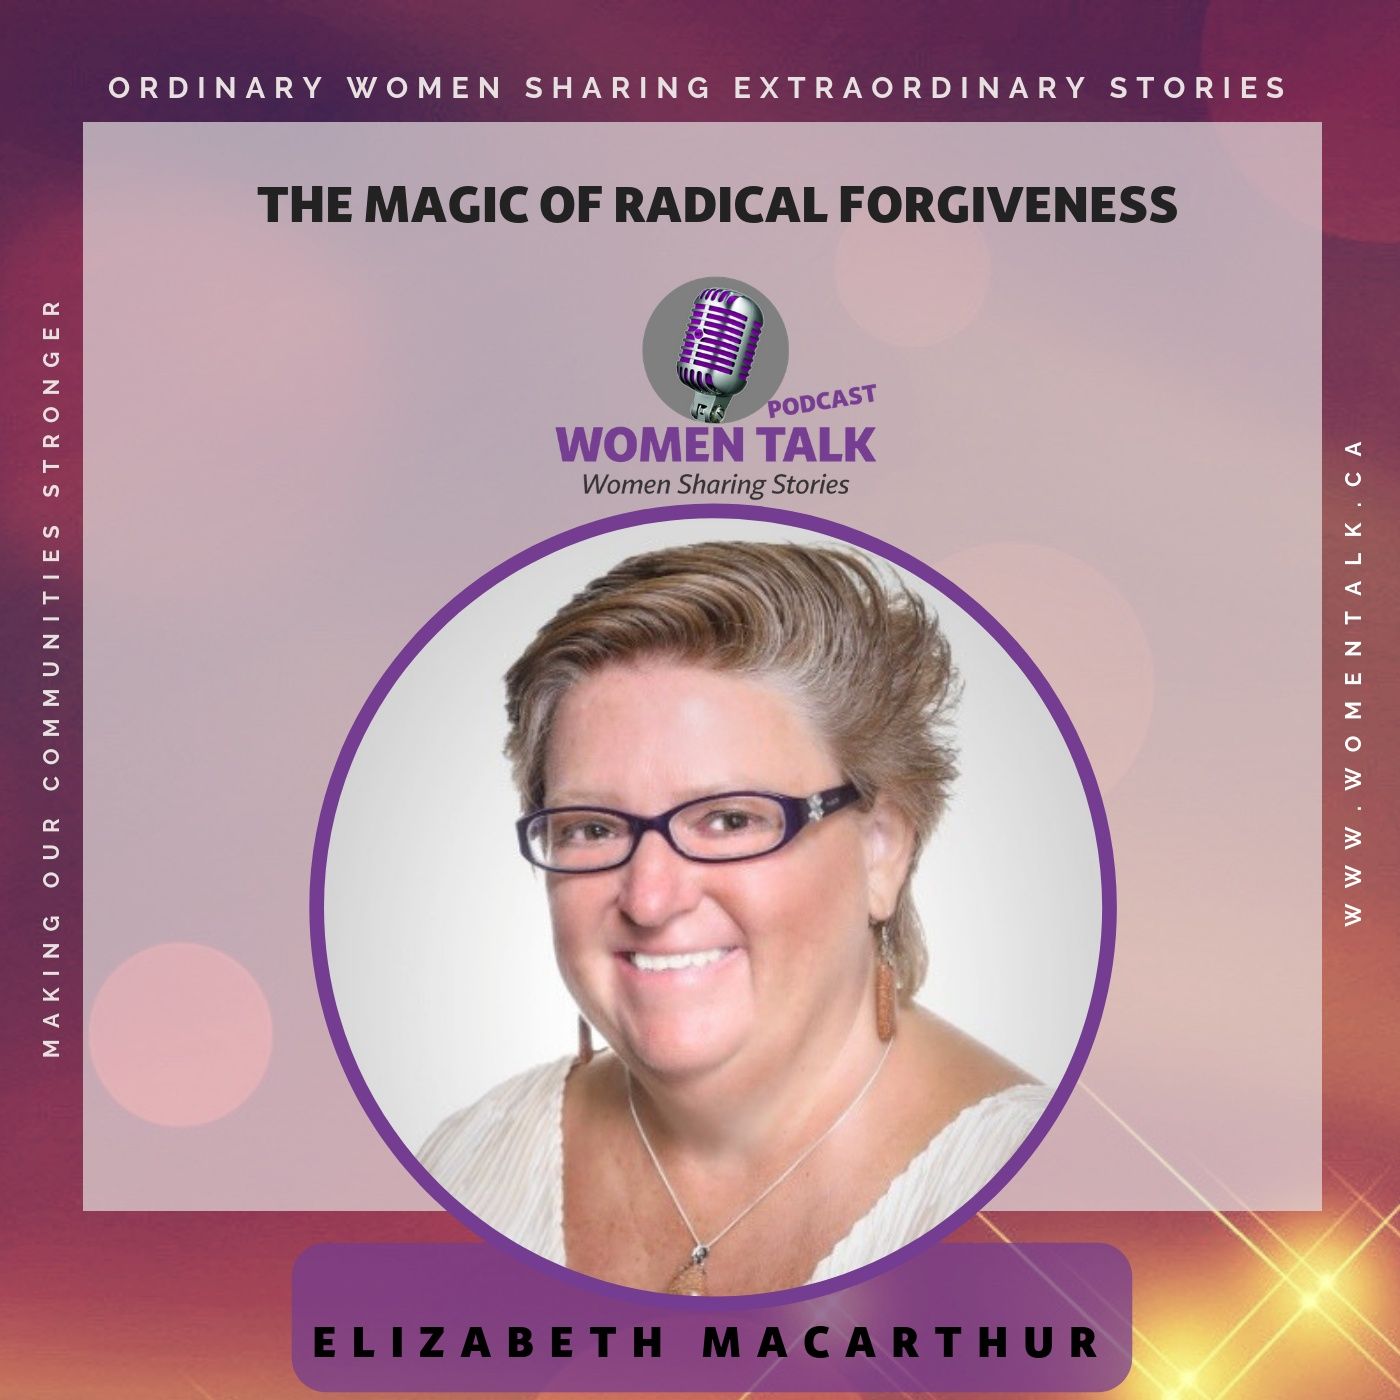 The Magic Of Radical Forgiveness with Elizabeth Macarthur